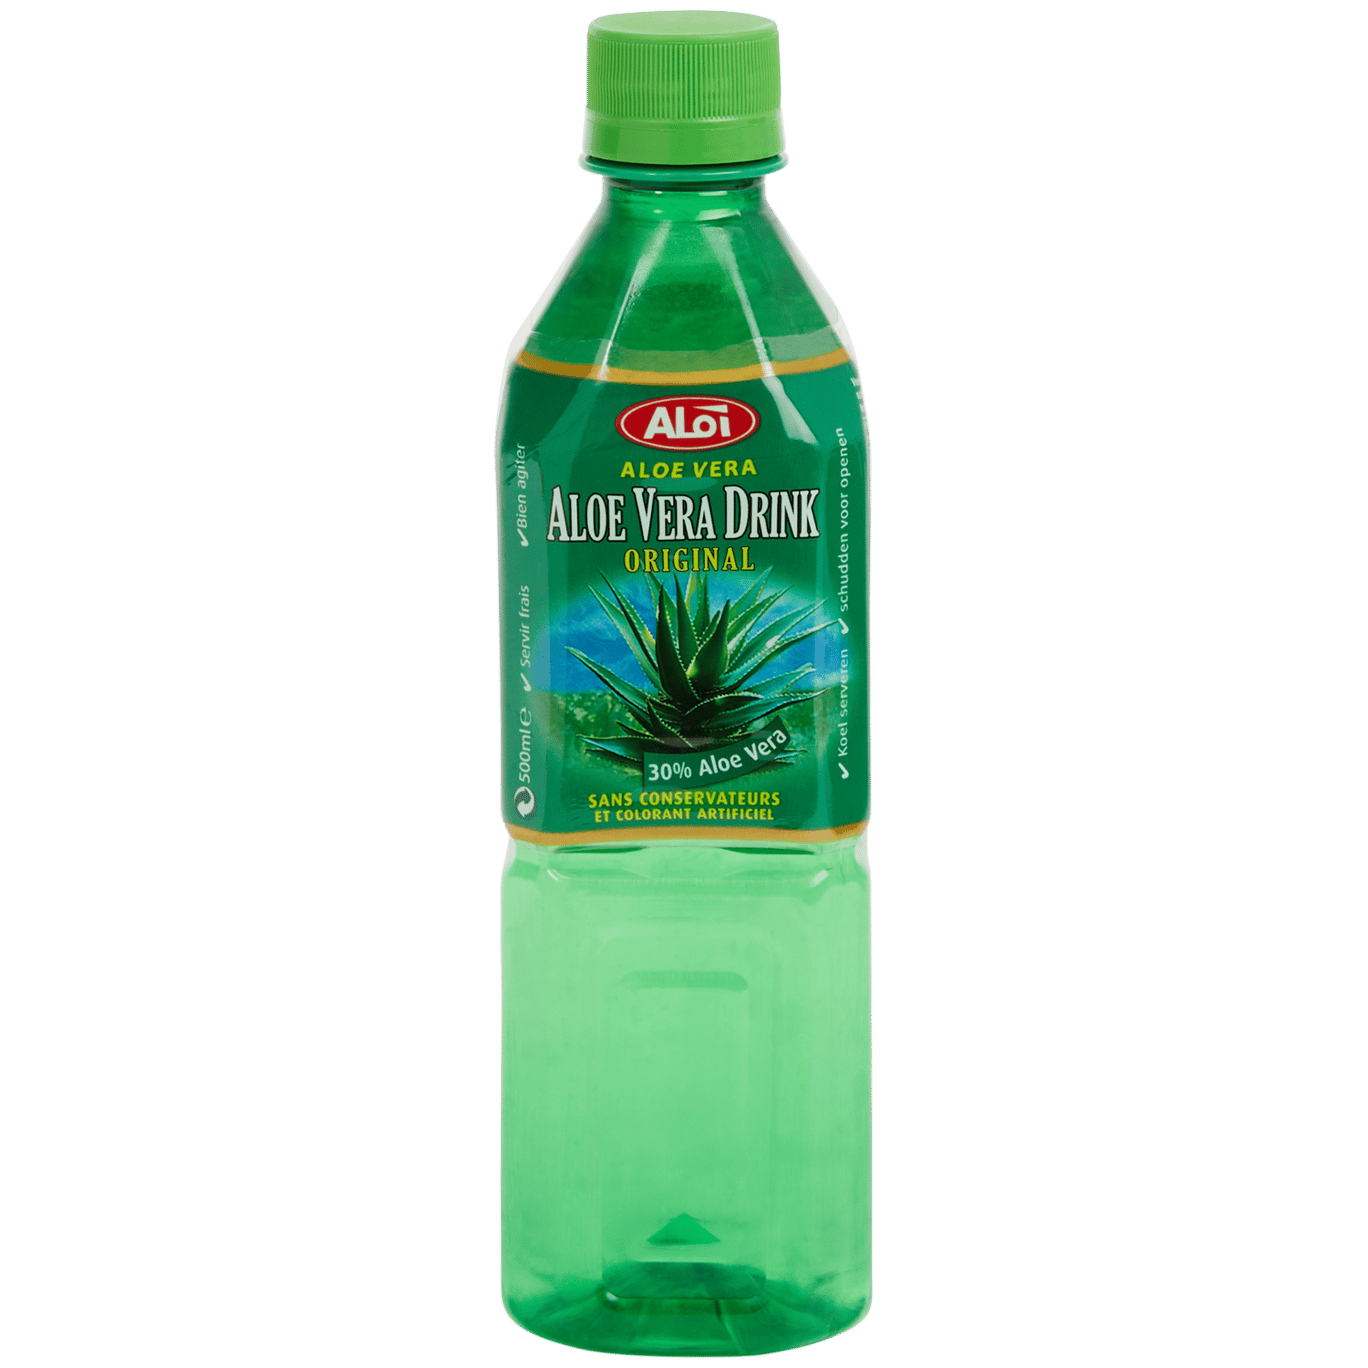 Aloe vera drink Aloi